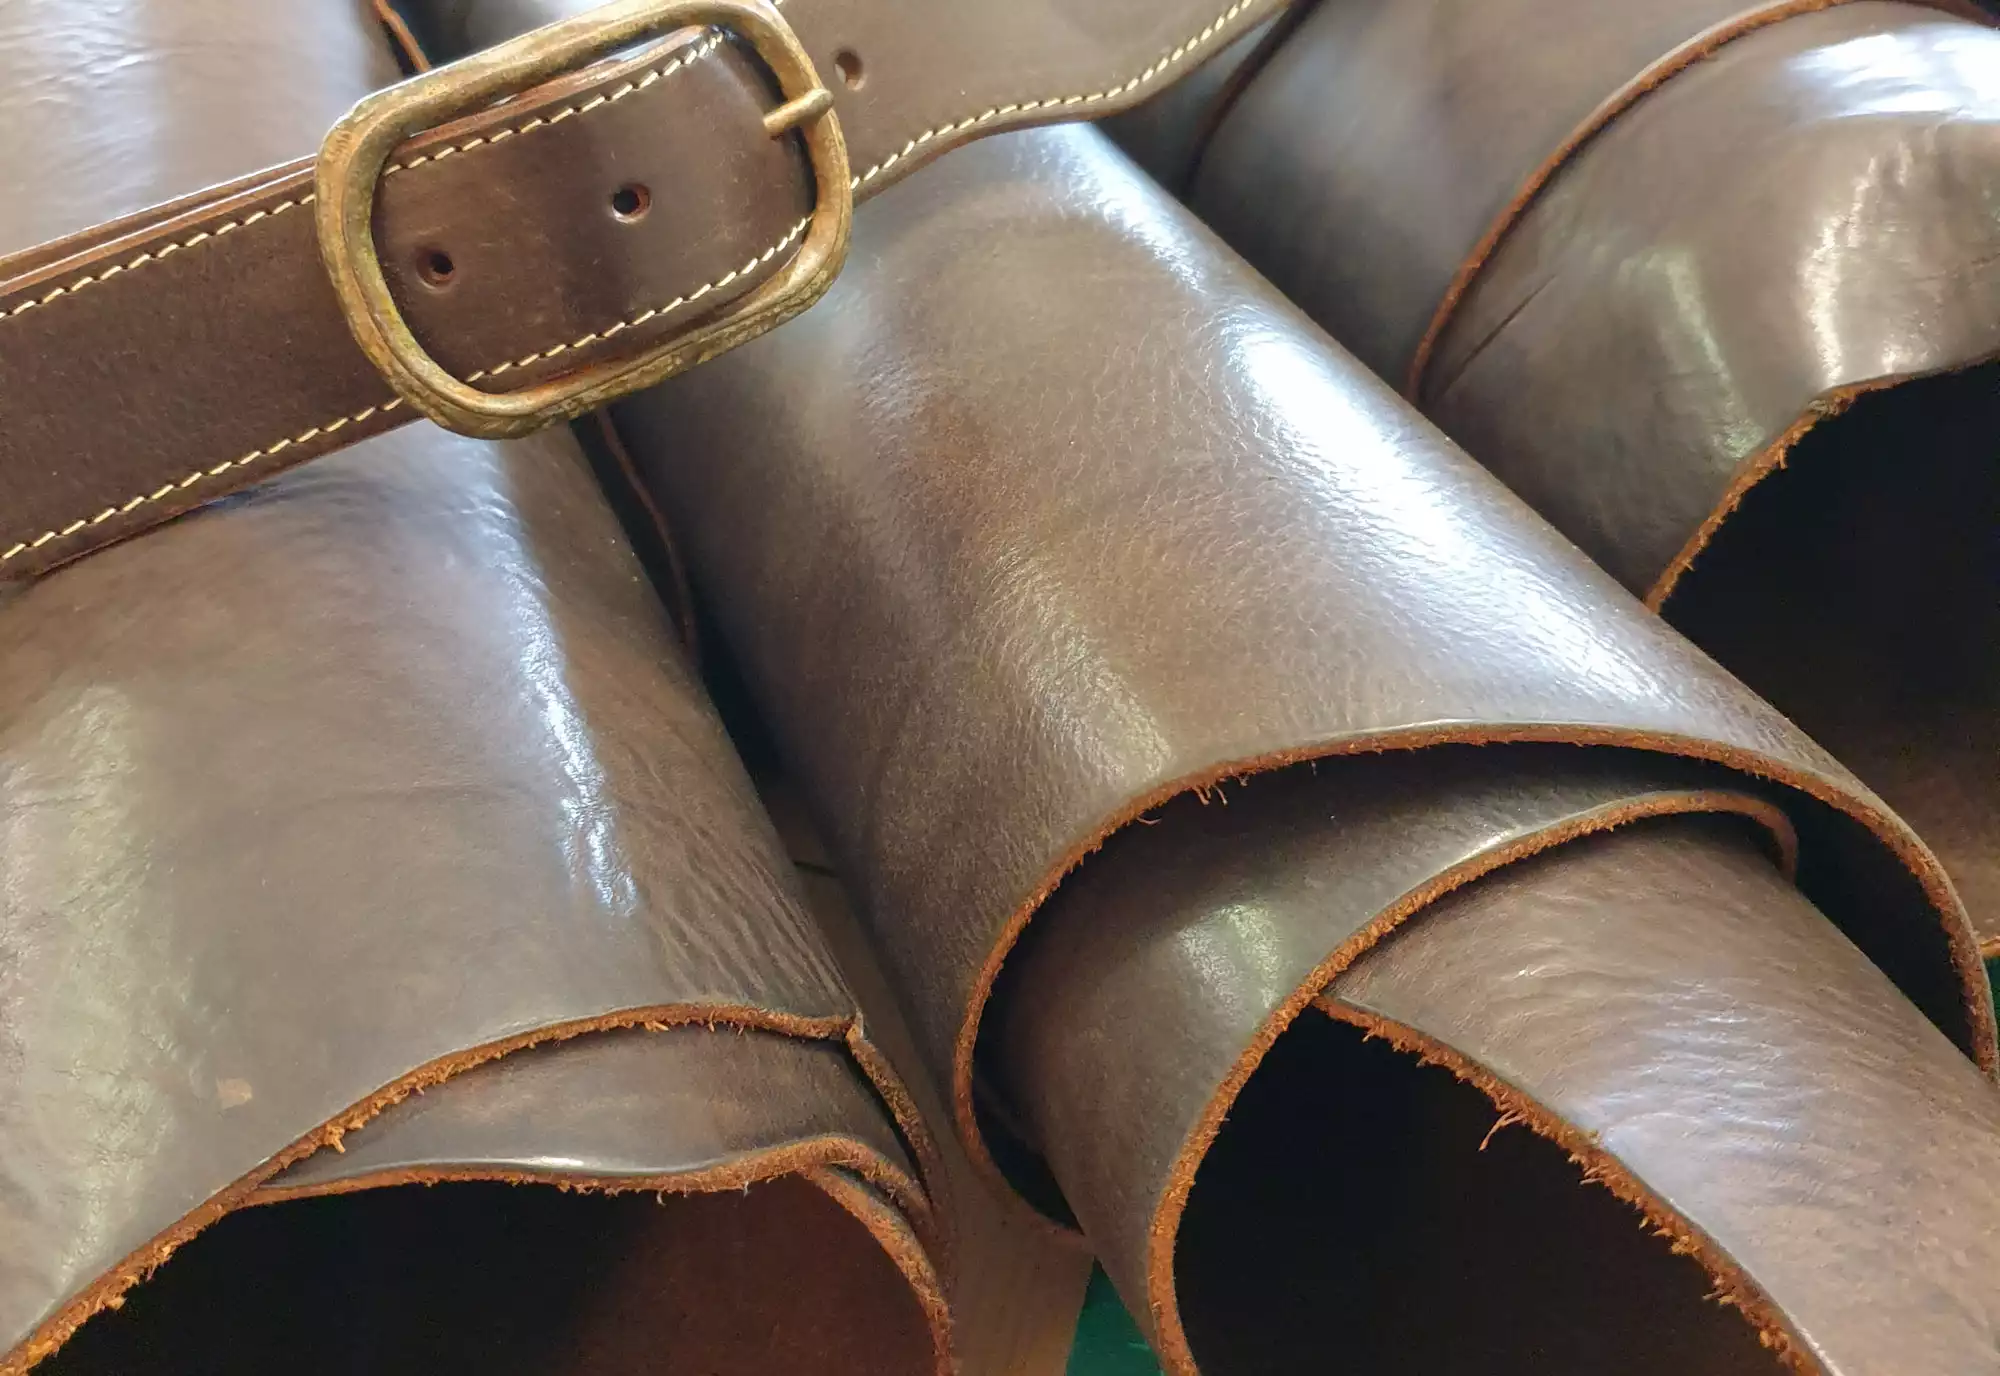 rolls of leather.jpg